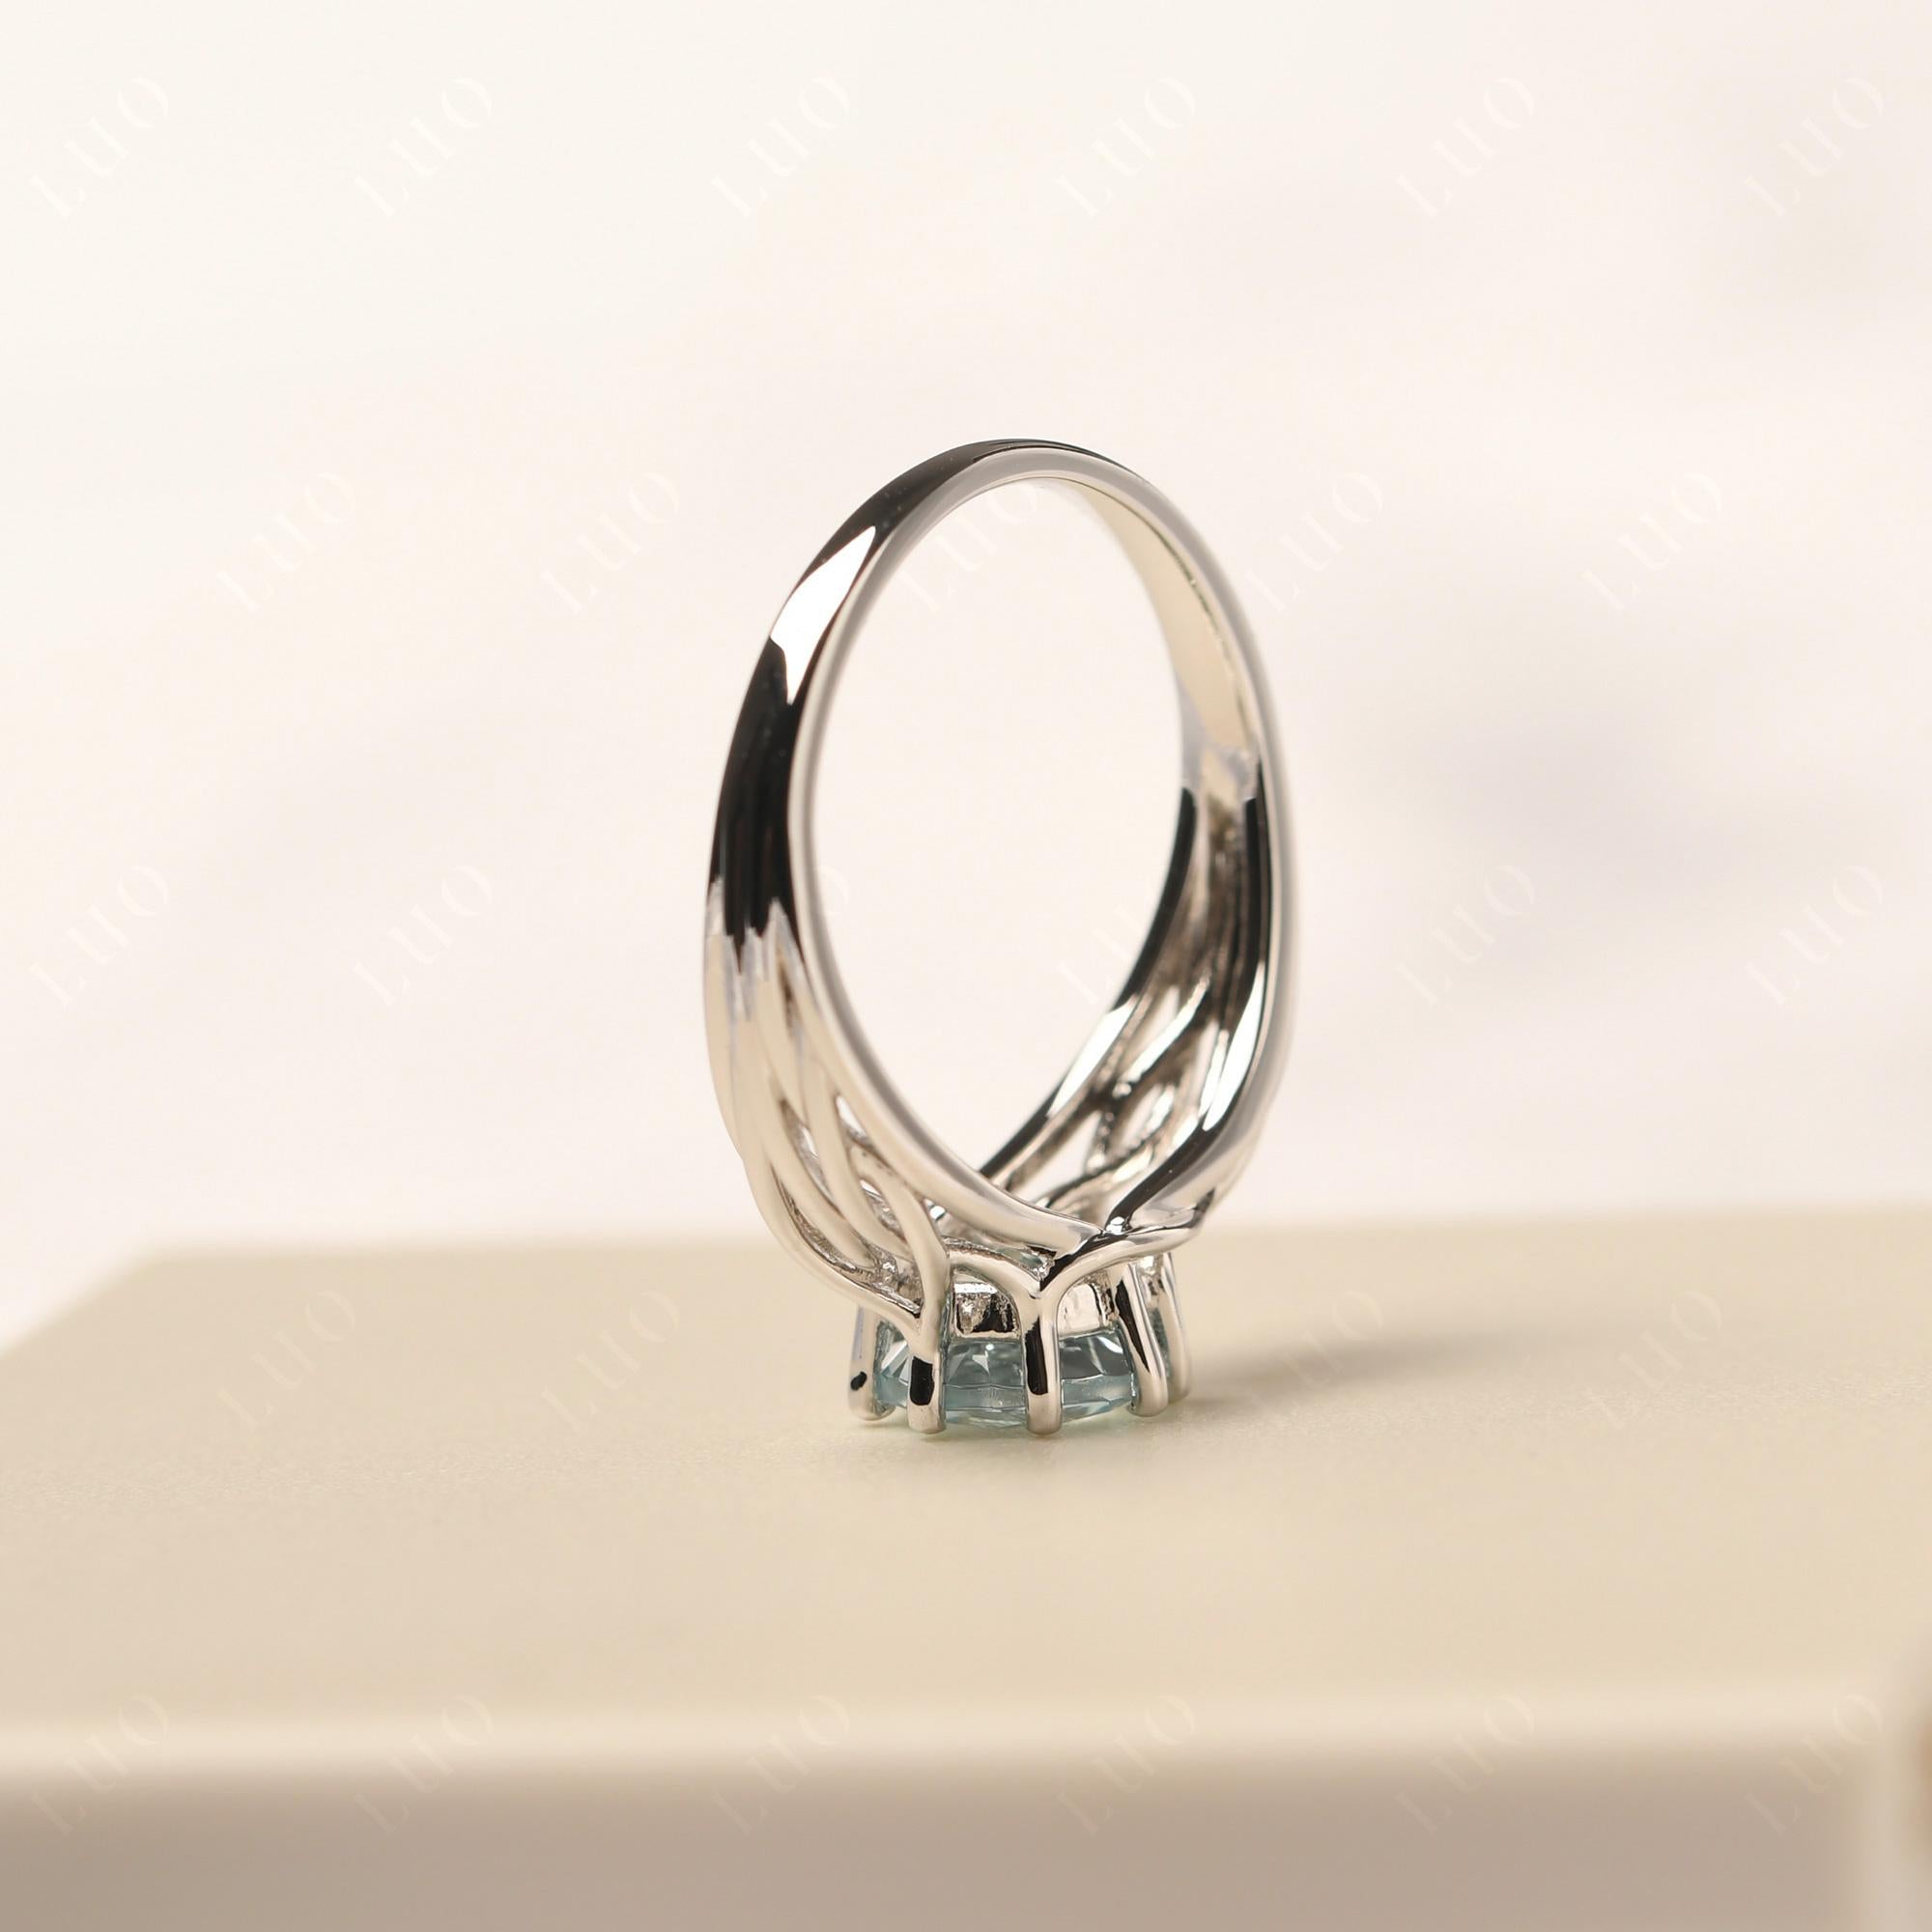 Intertwined Aquamarine Wedding Ring - LUO Jewelry